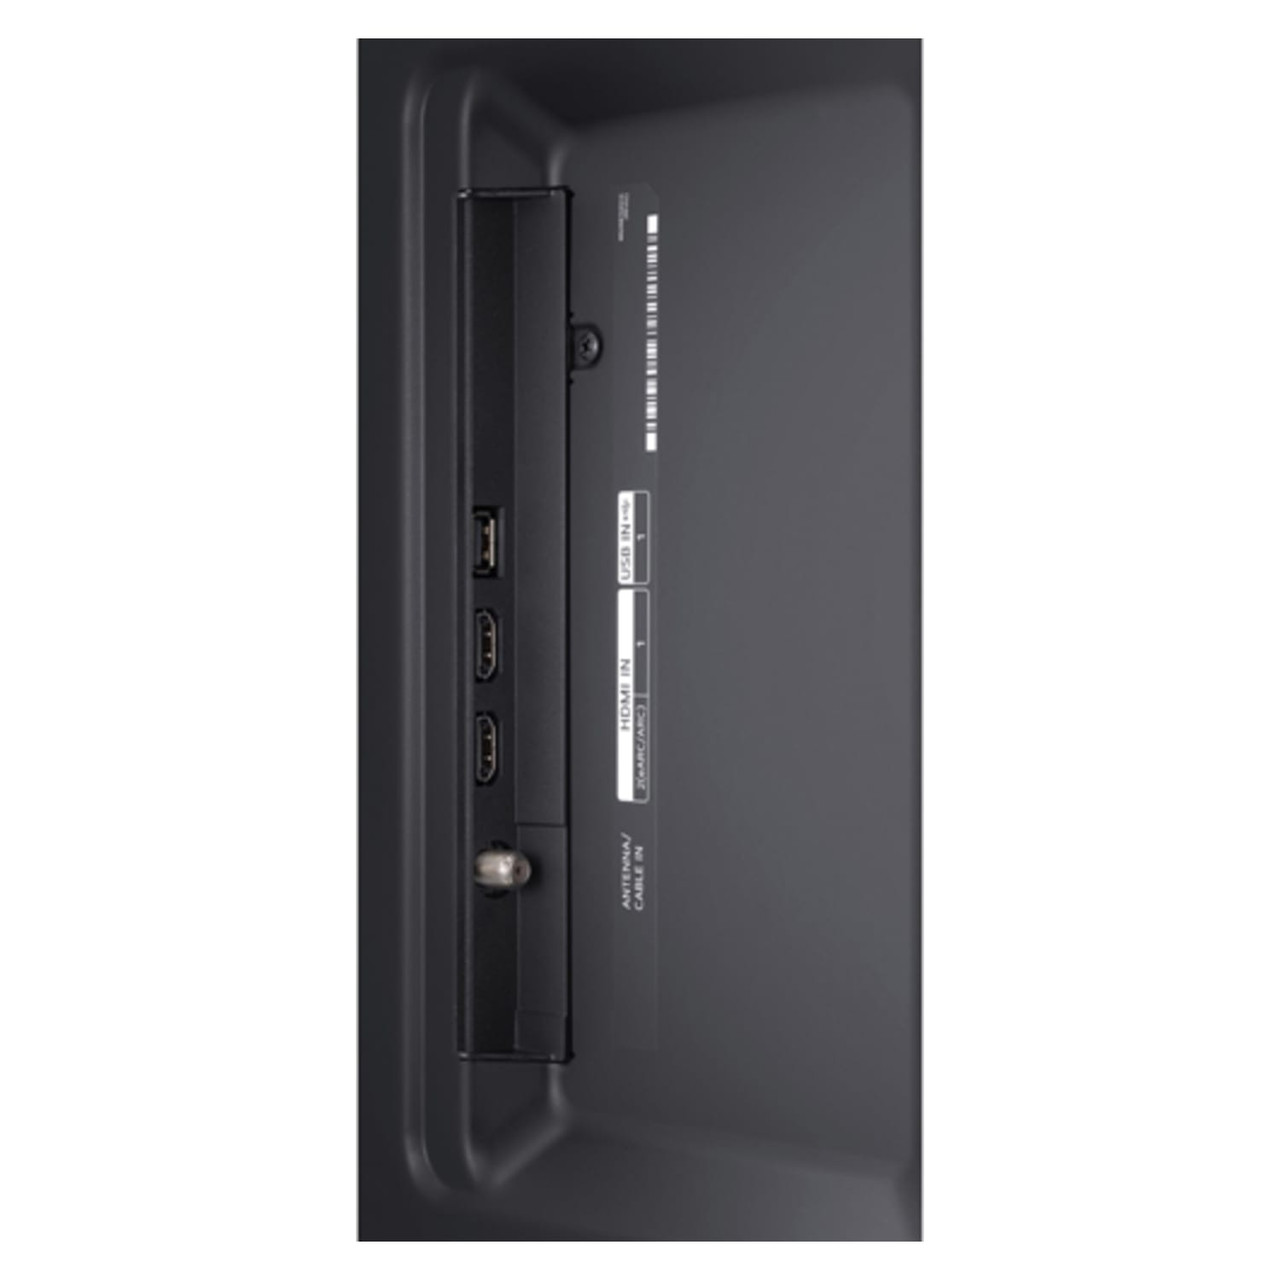 LG UHD 80 Series 75” Class 4K Smart UHD TV with AI ThinQ® - 75UP8070PUA